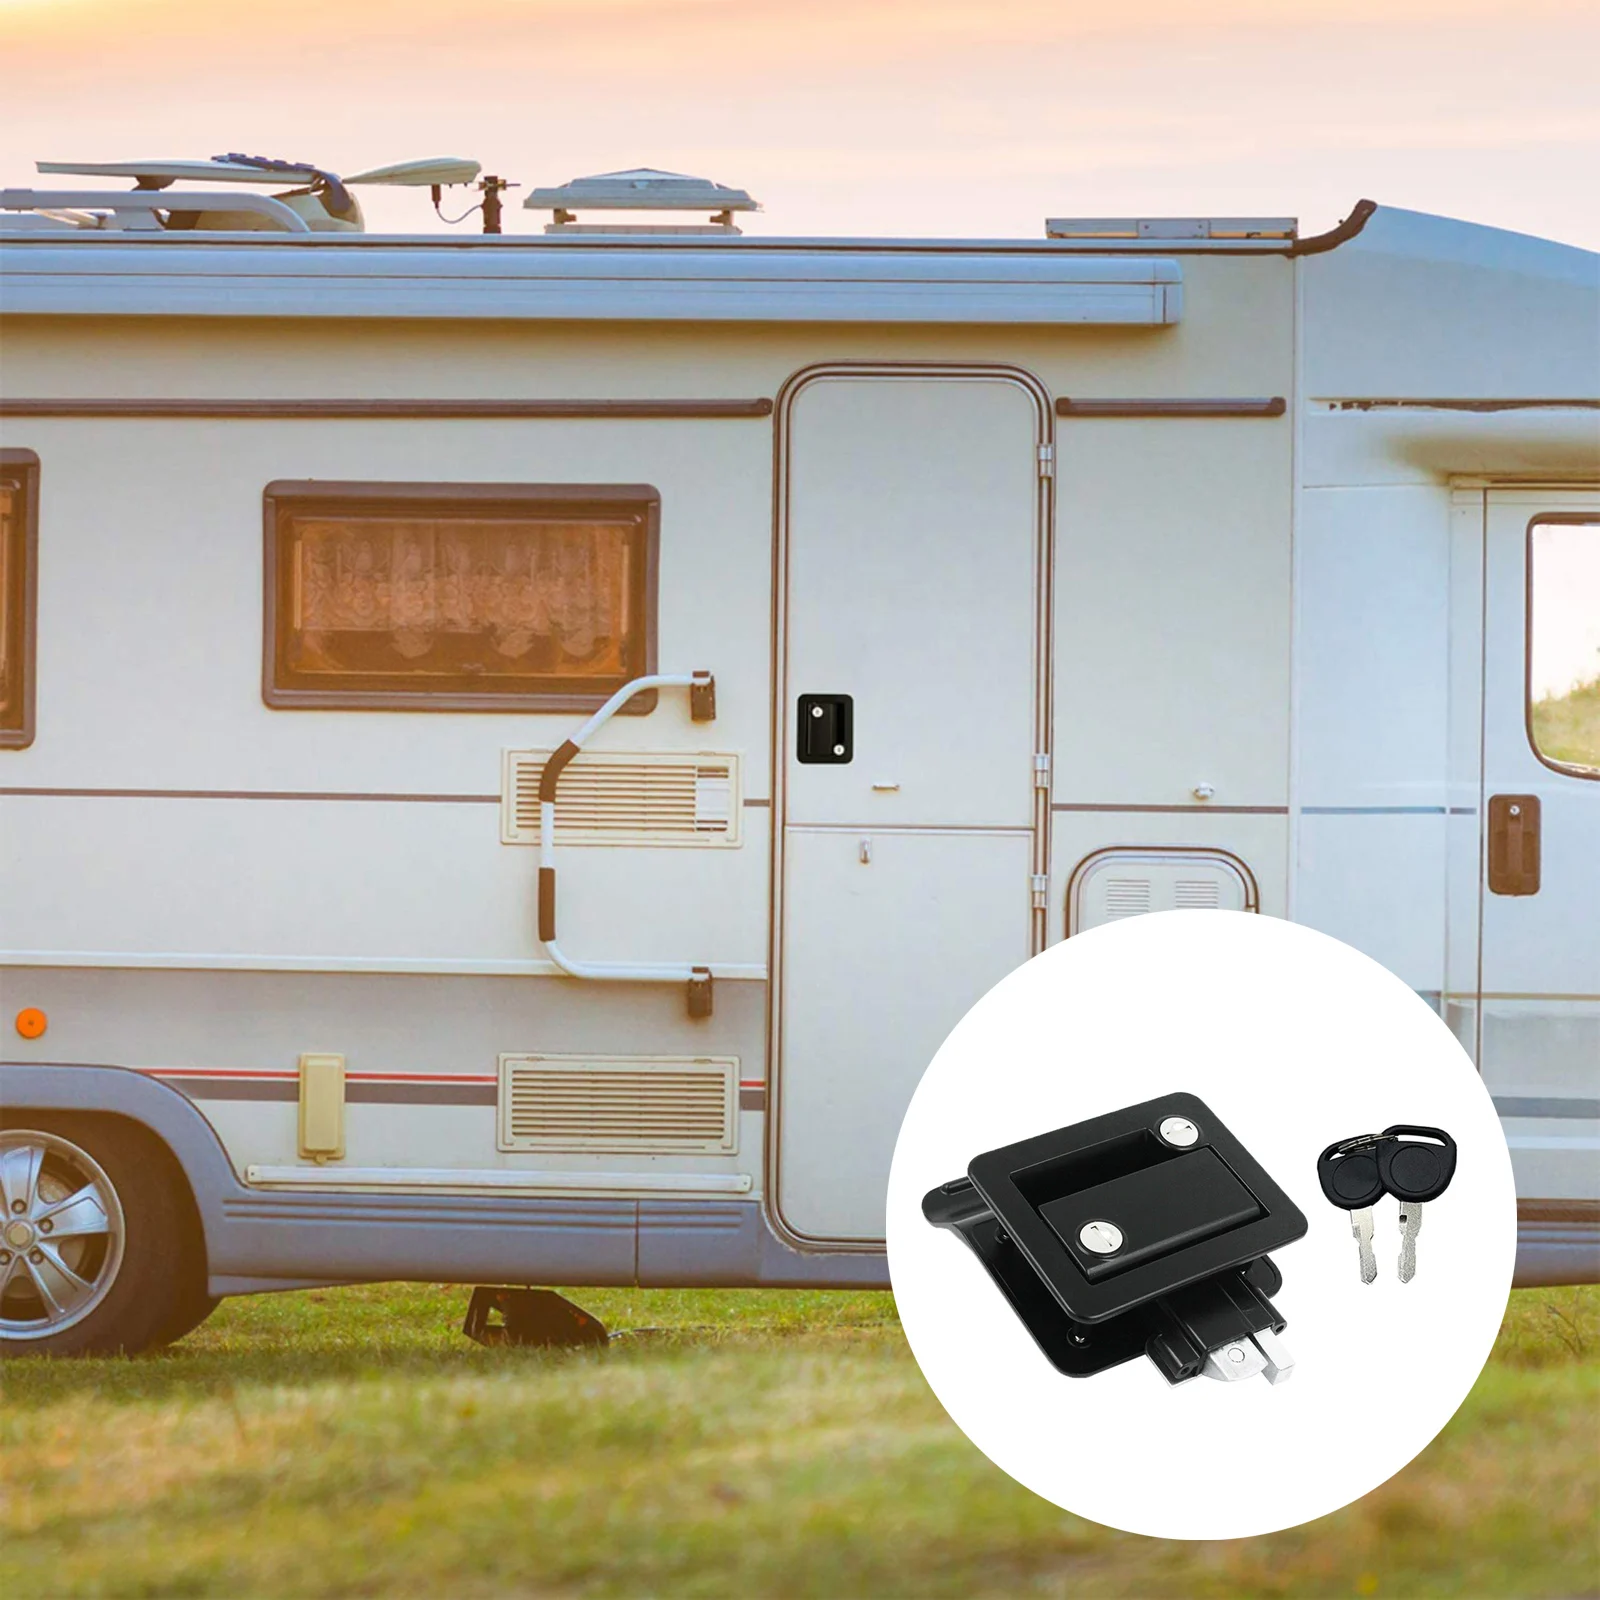 Zinc Alloy Camper RV Door Latch Locks Kit for Travel Trailers, Universal Fit